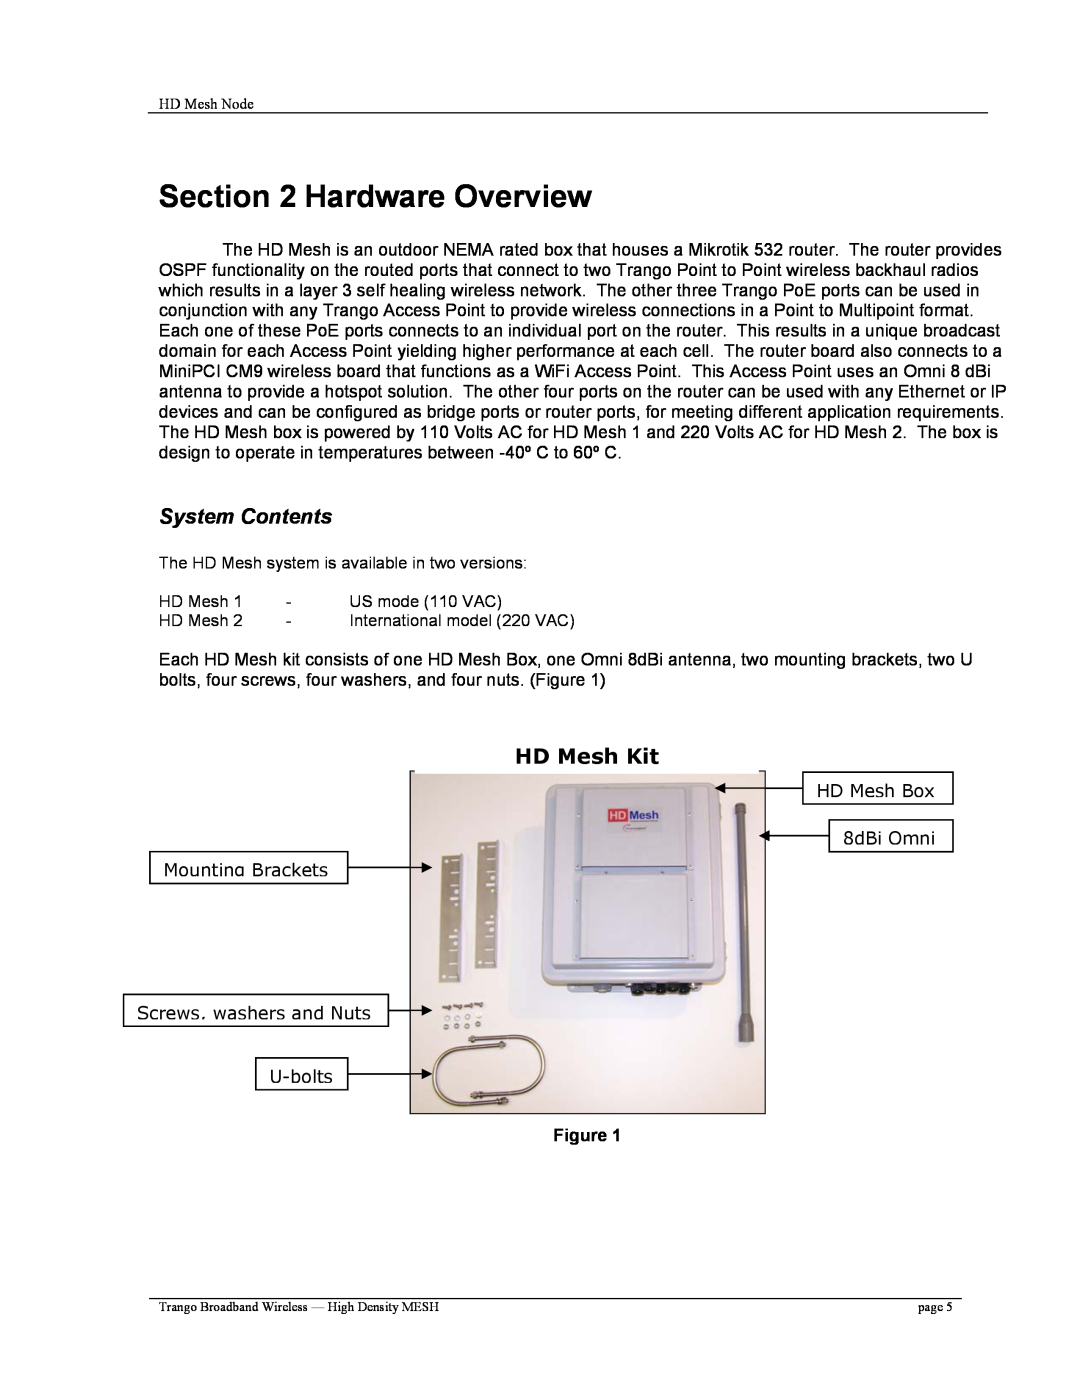 Trango Broadband High Density Mesh System user manual Hardware Overview, System Contents, HD Mesh Kit 